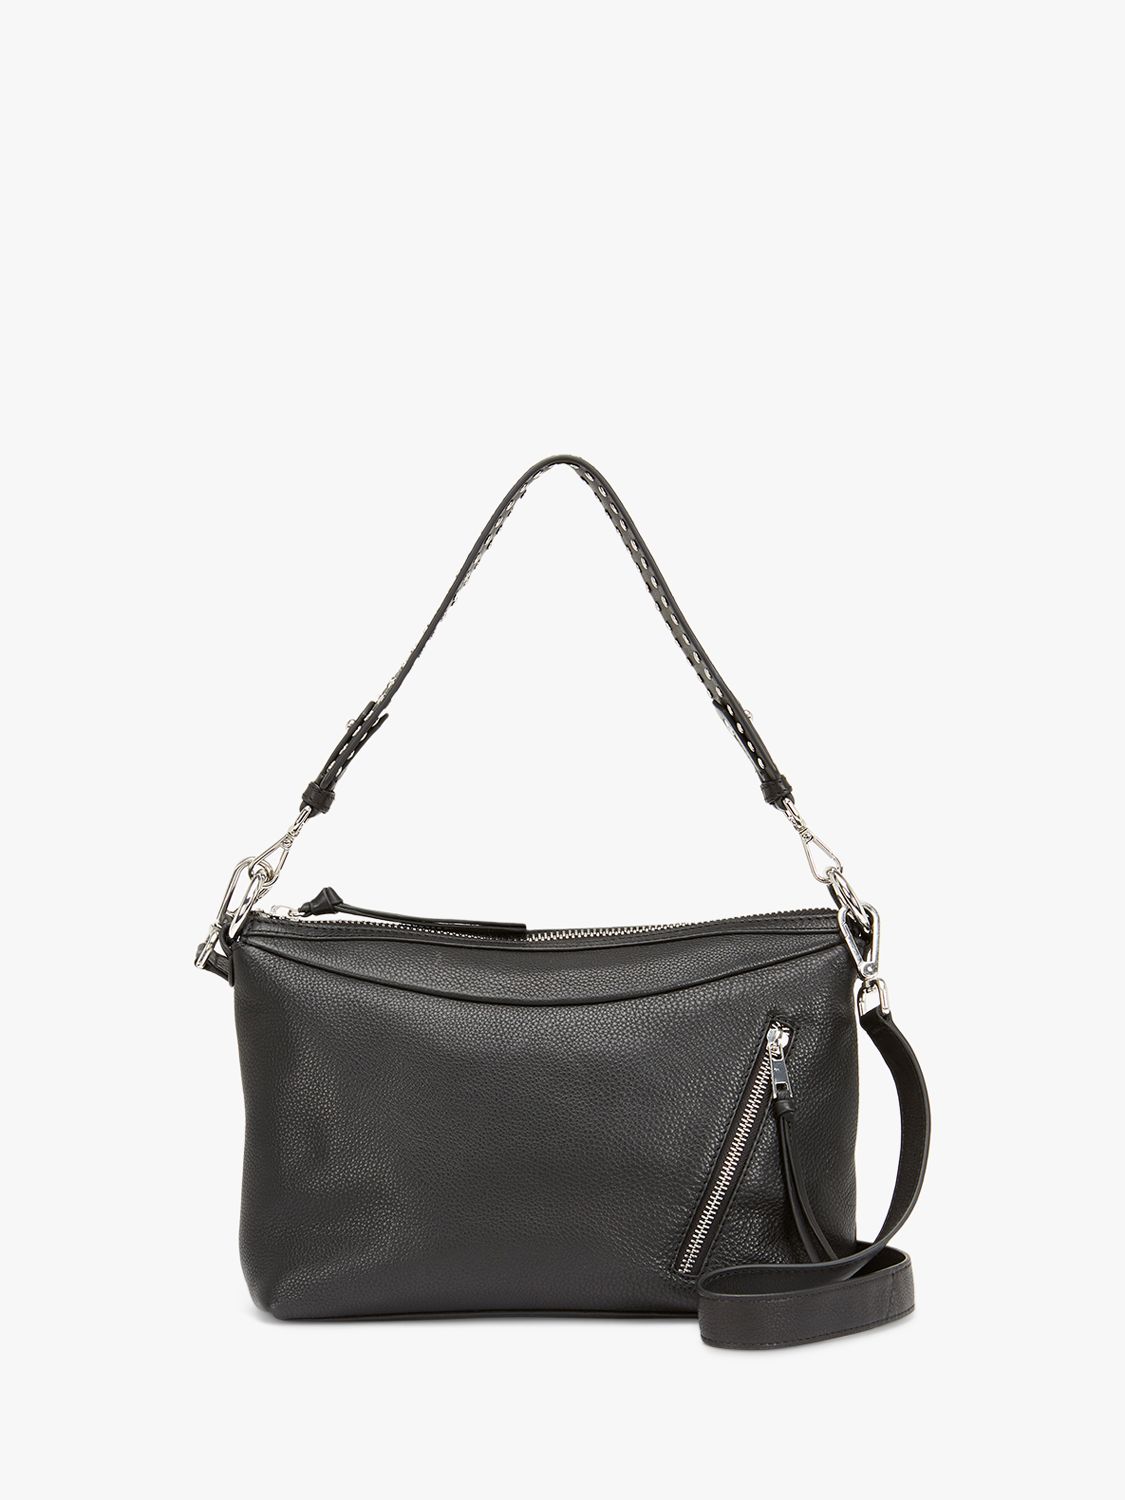 Mint Velvet Raye Leather Stud Bag, Black, One Size